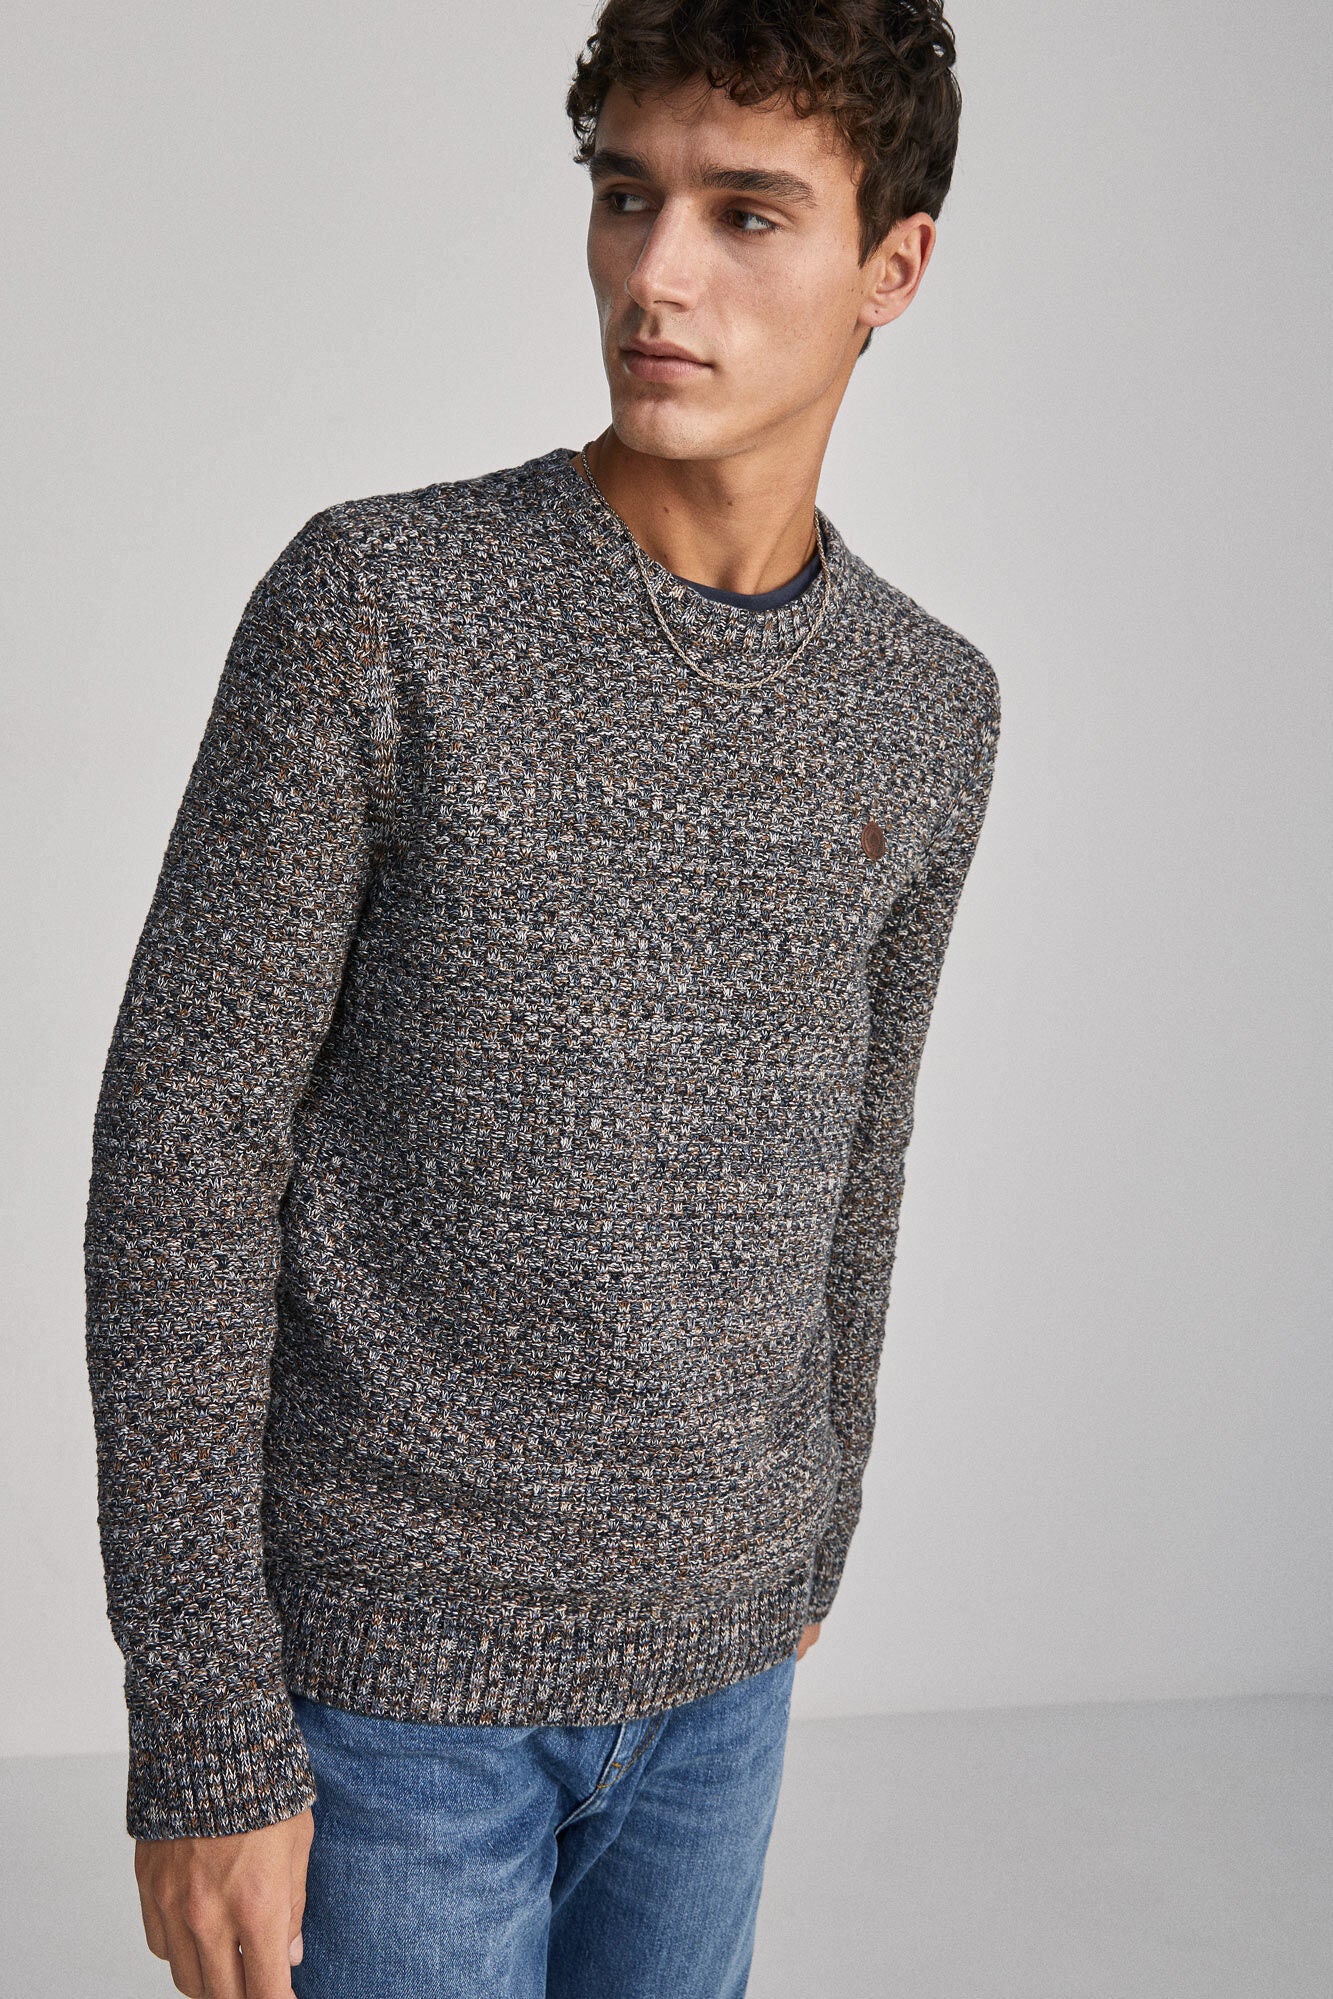 Textured fancy knit jumper